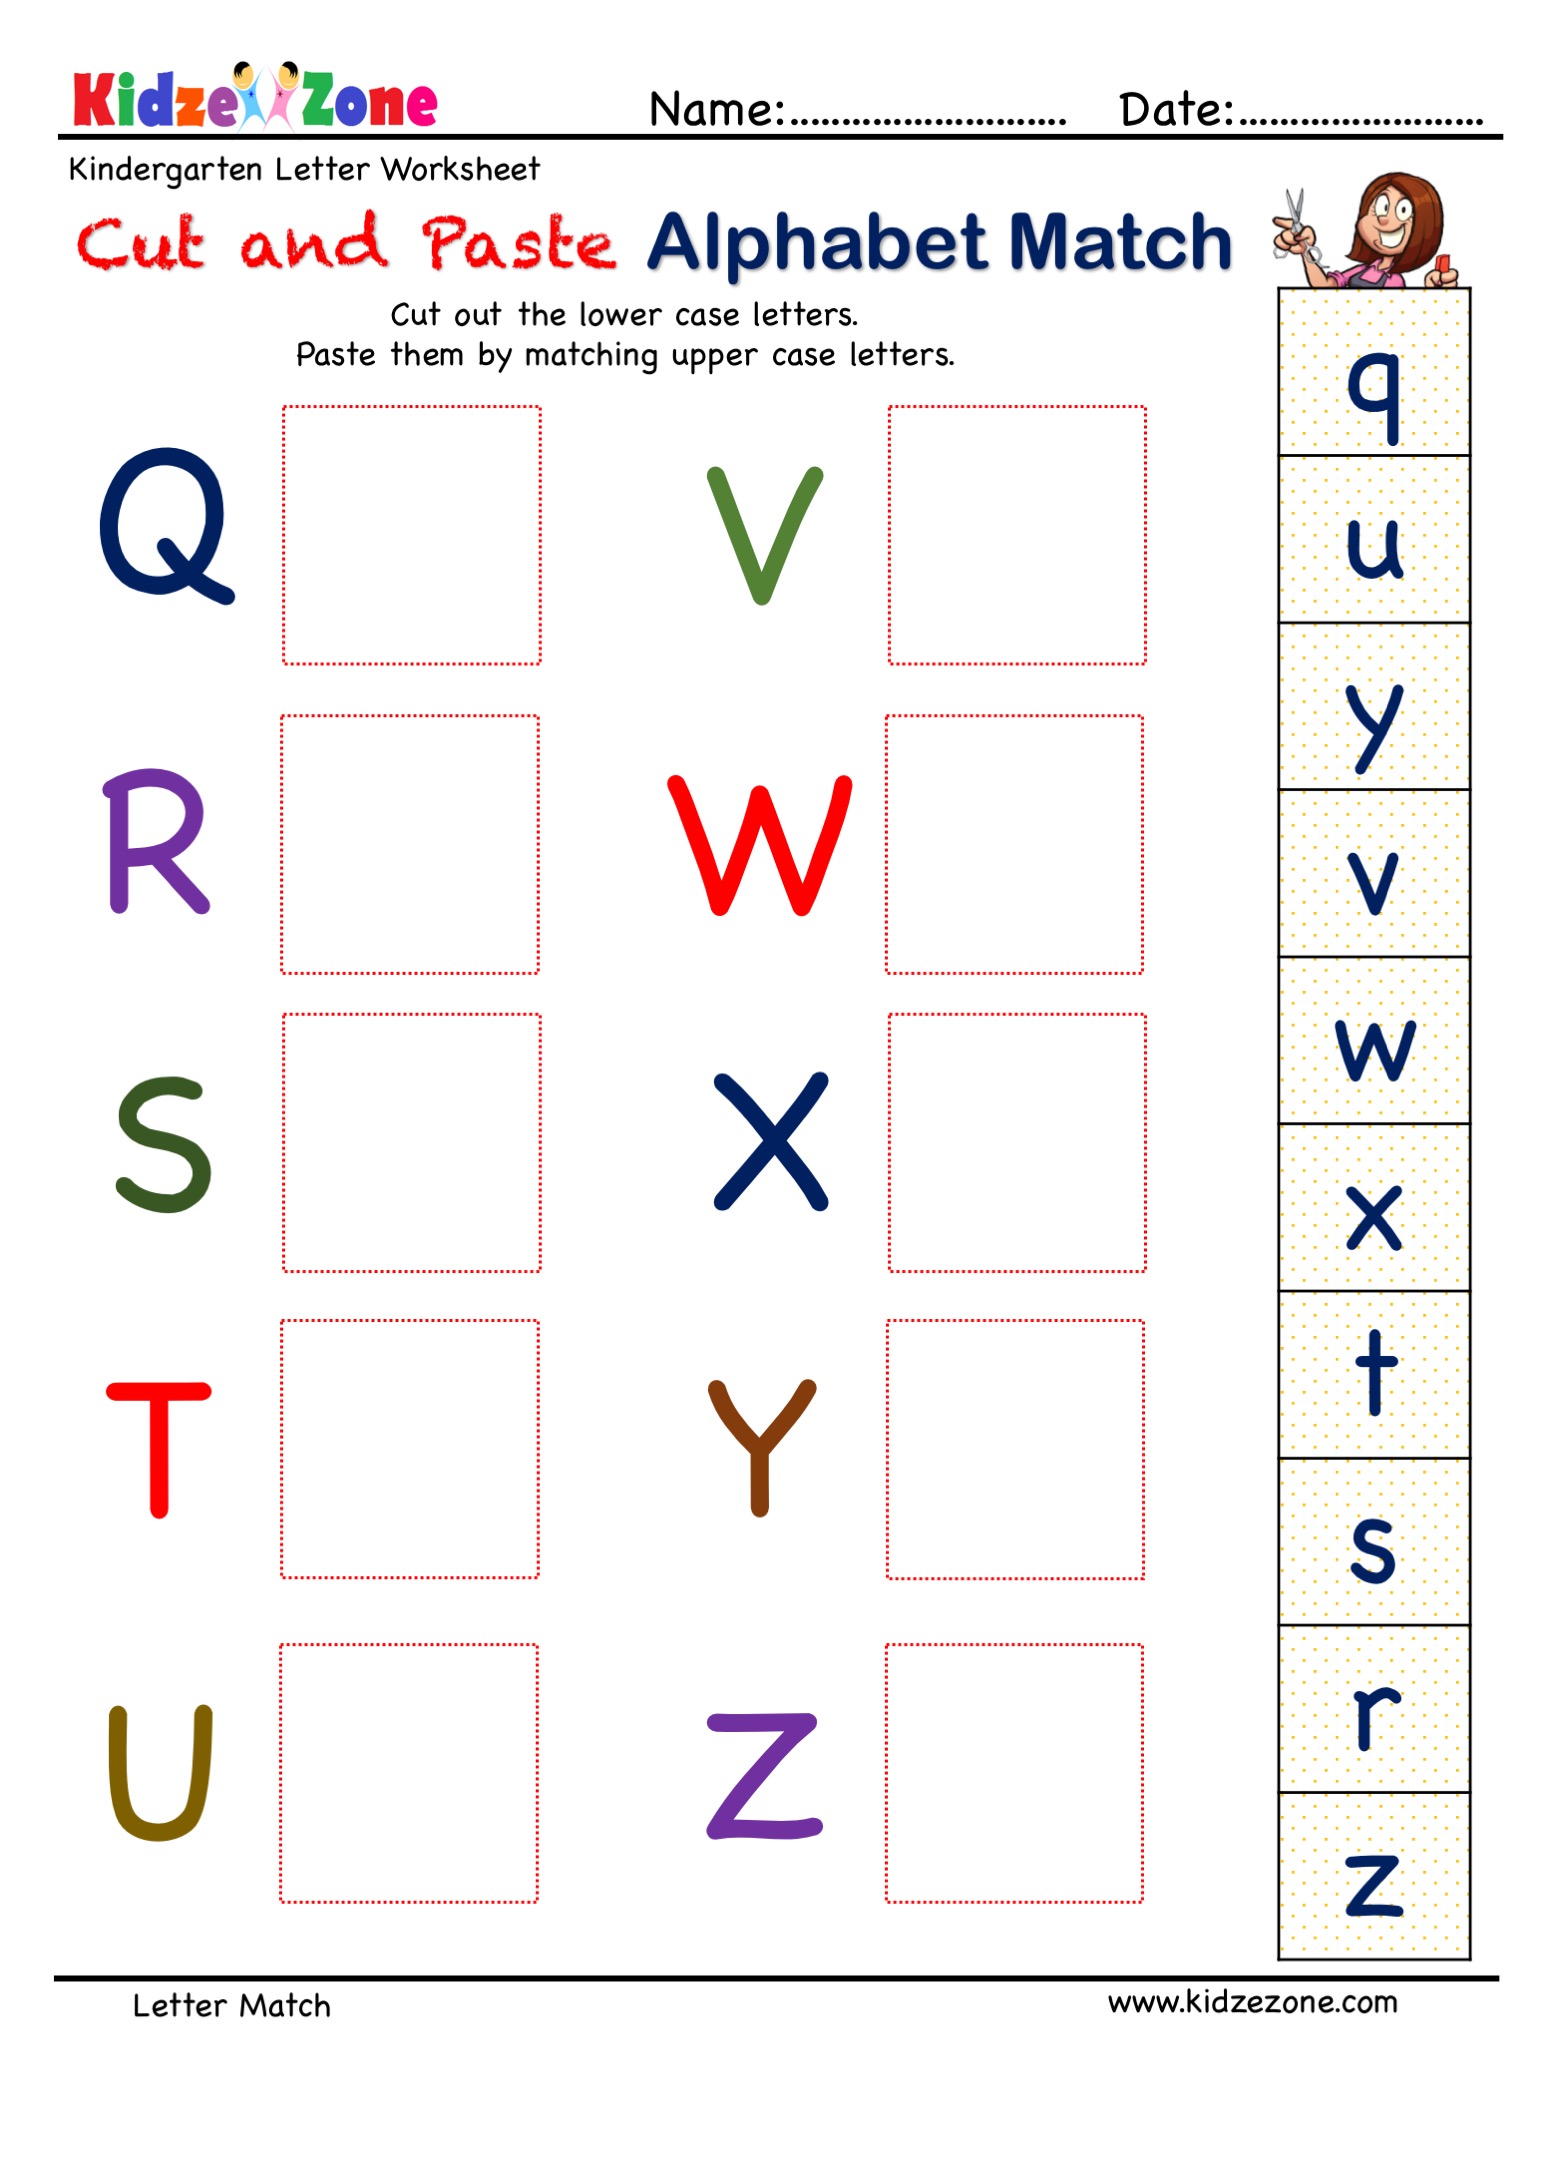 cut-and-paste-alphabet-match-printable